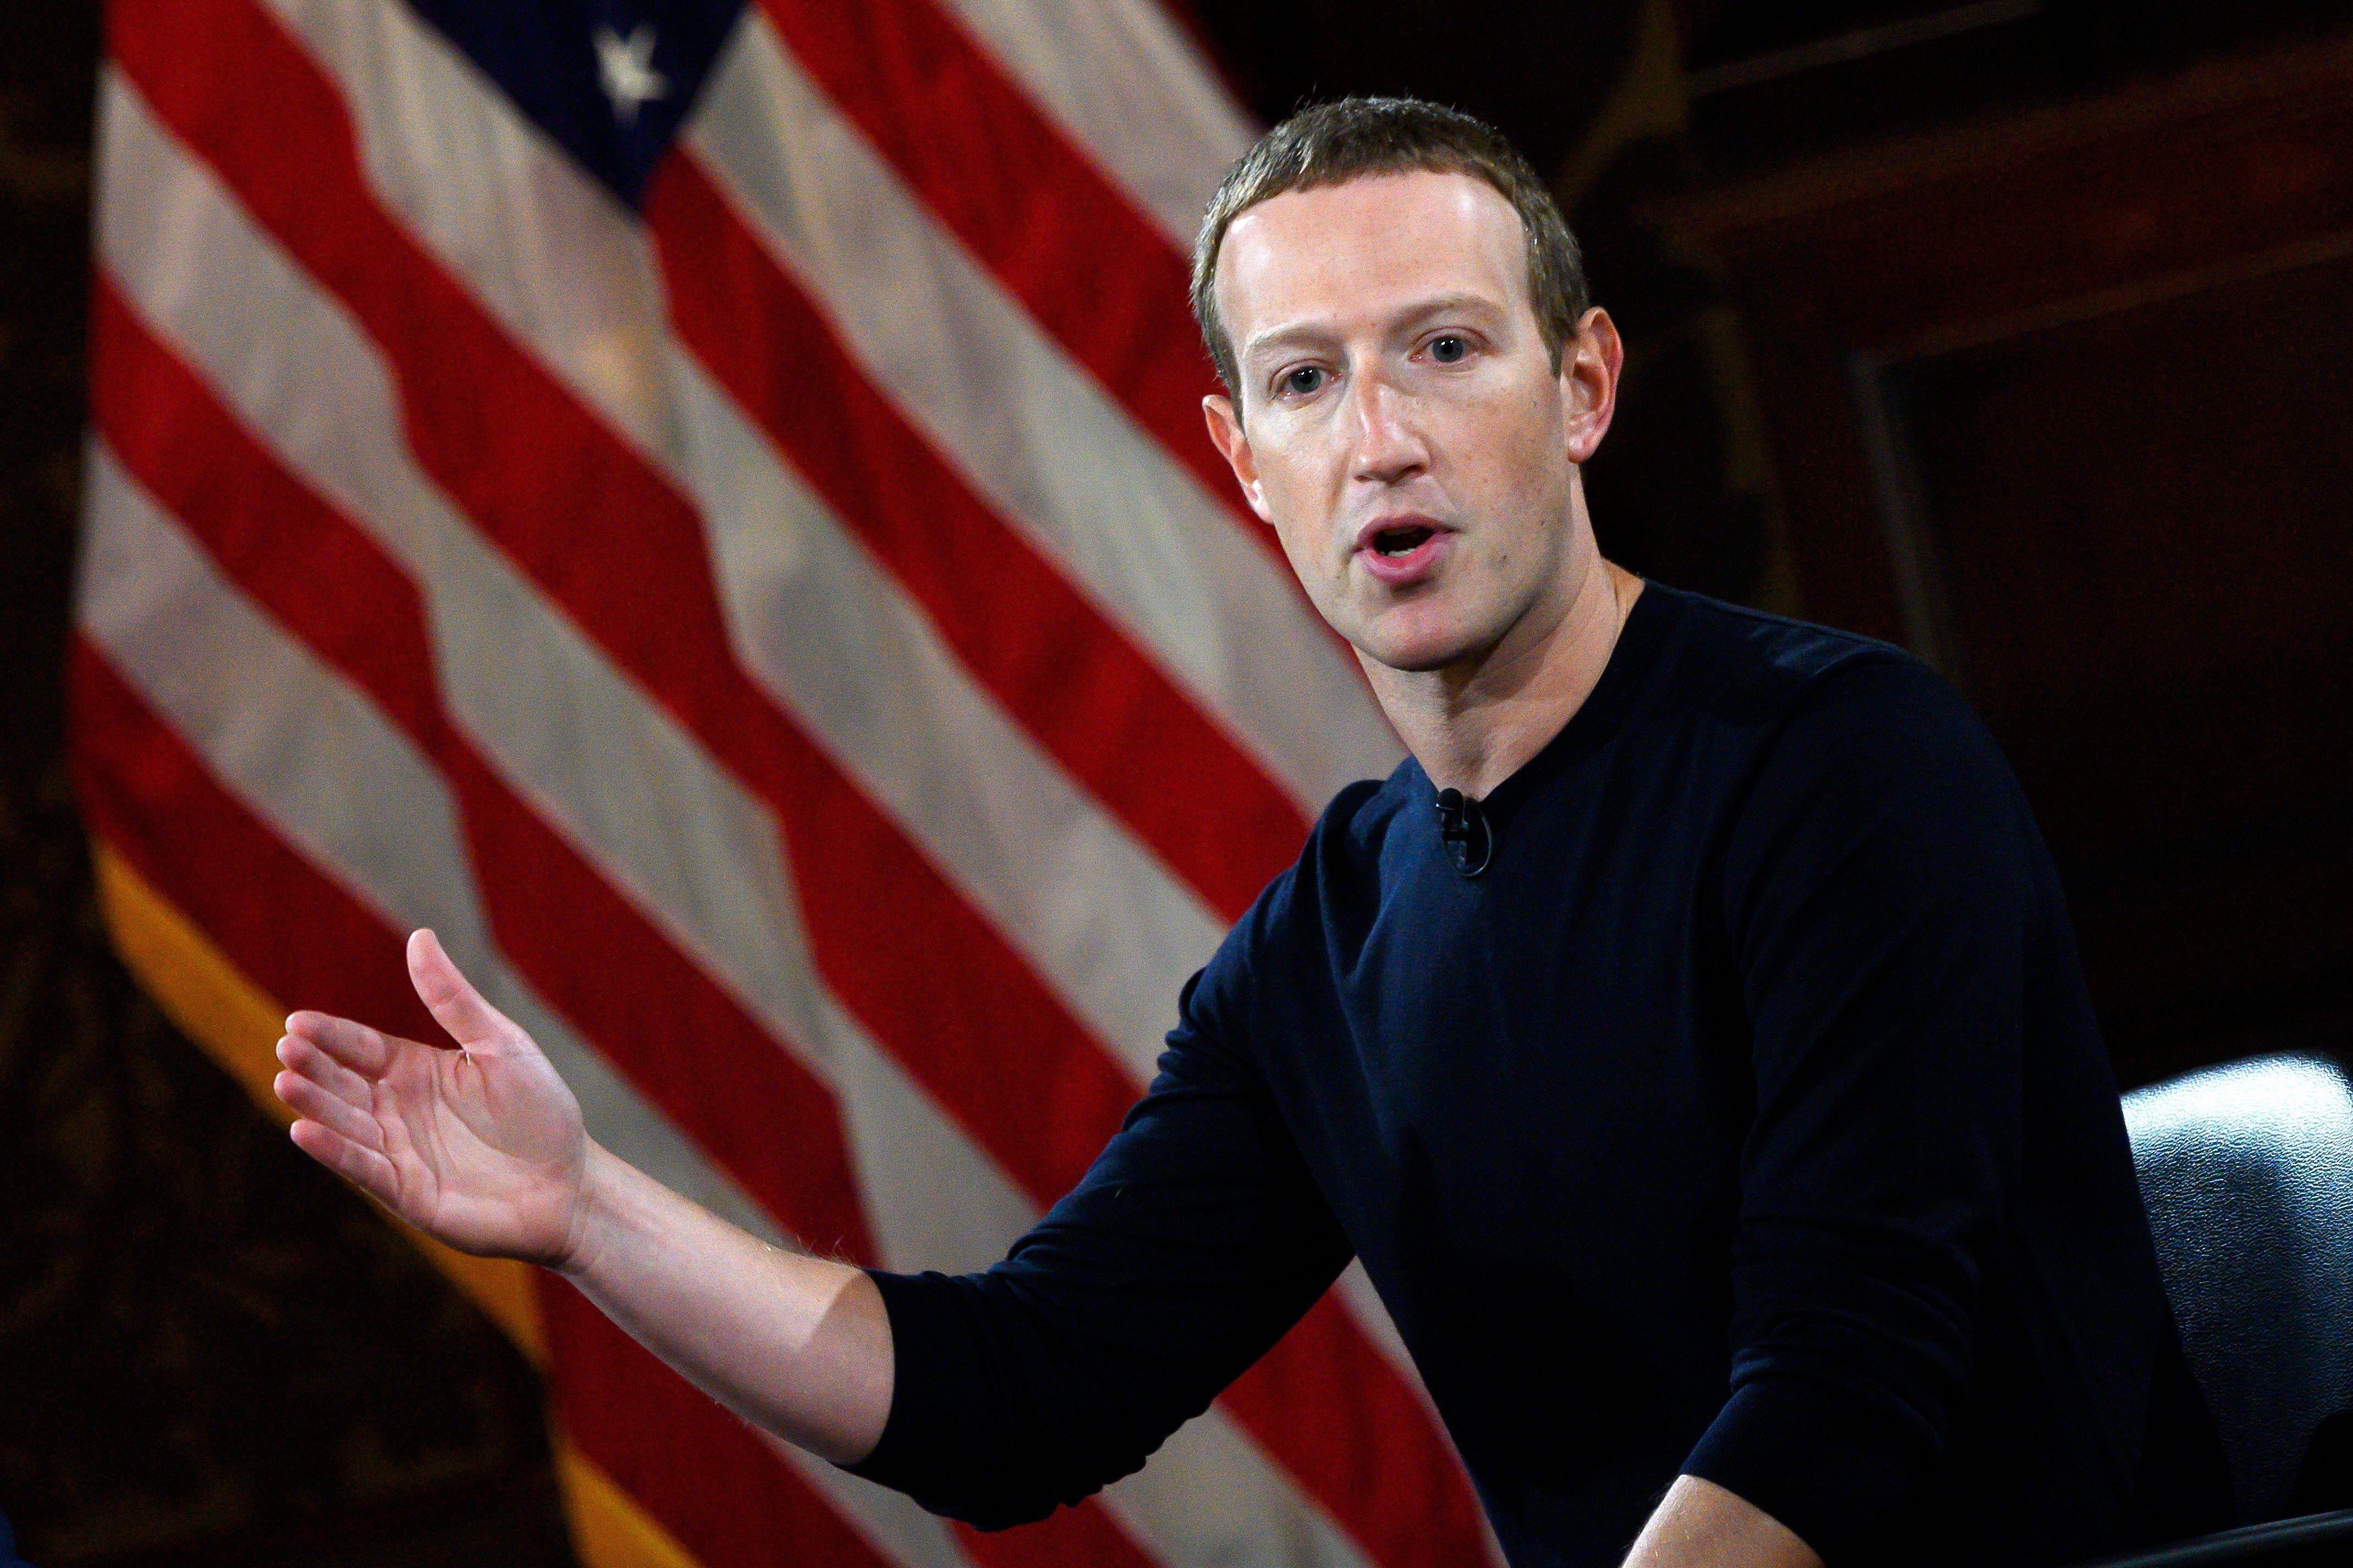 Facebook founder Mark Zuckerberg speaks at Georgetown University.